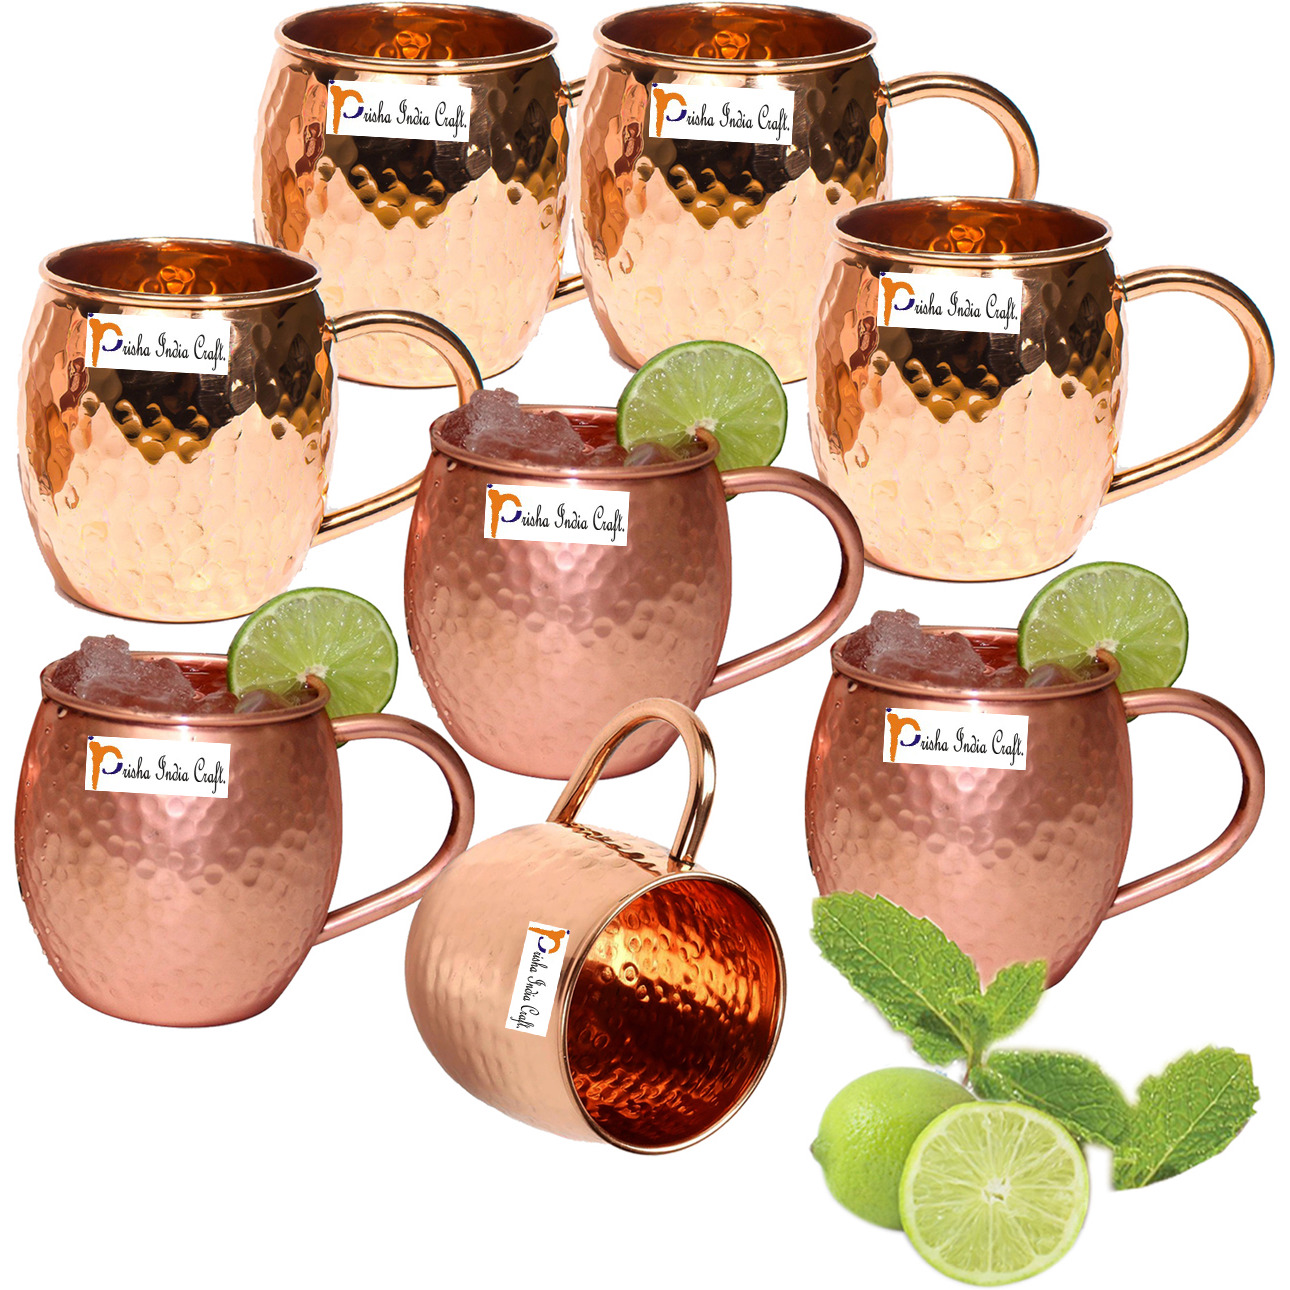 Set of 8 - Prisha India Craft B. Copper Barrel Mug Hammered for Moscow Mules 520 ML / 17 oz 100% Pure Copper Mug, Mule Cup, Moscow Mule Cocktail Cup, Copper Mugs, Cocktail Mugs - with No Inner Linings